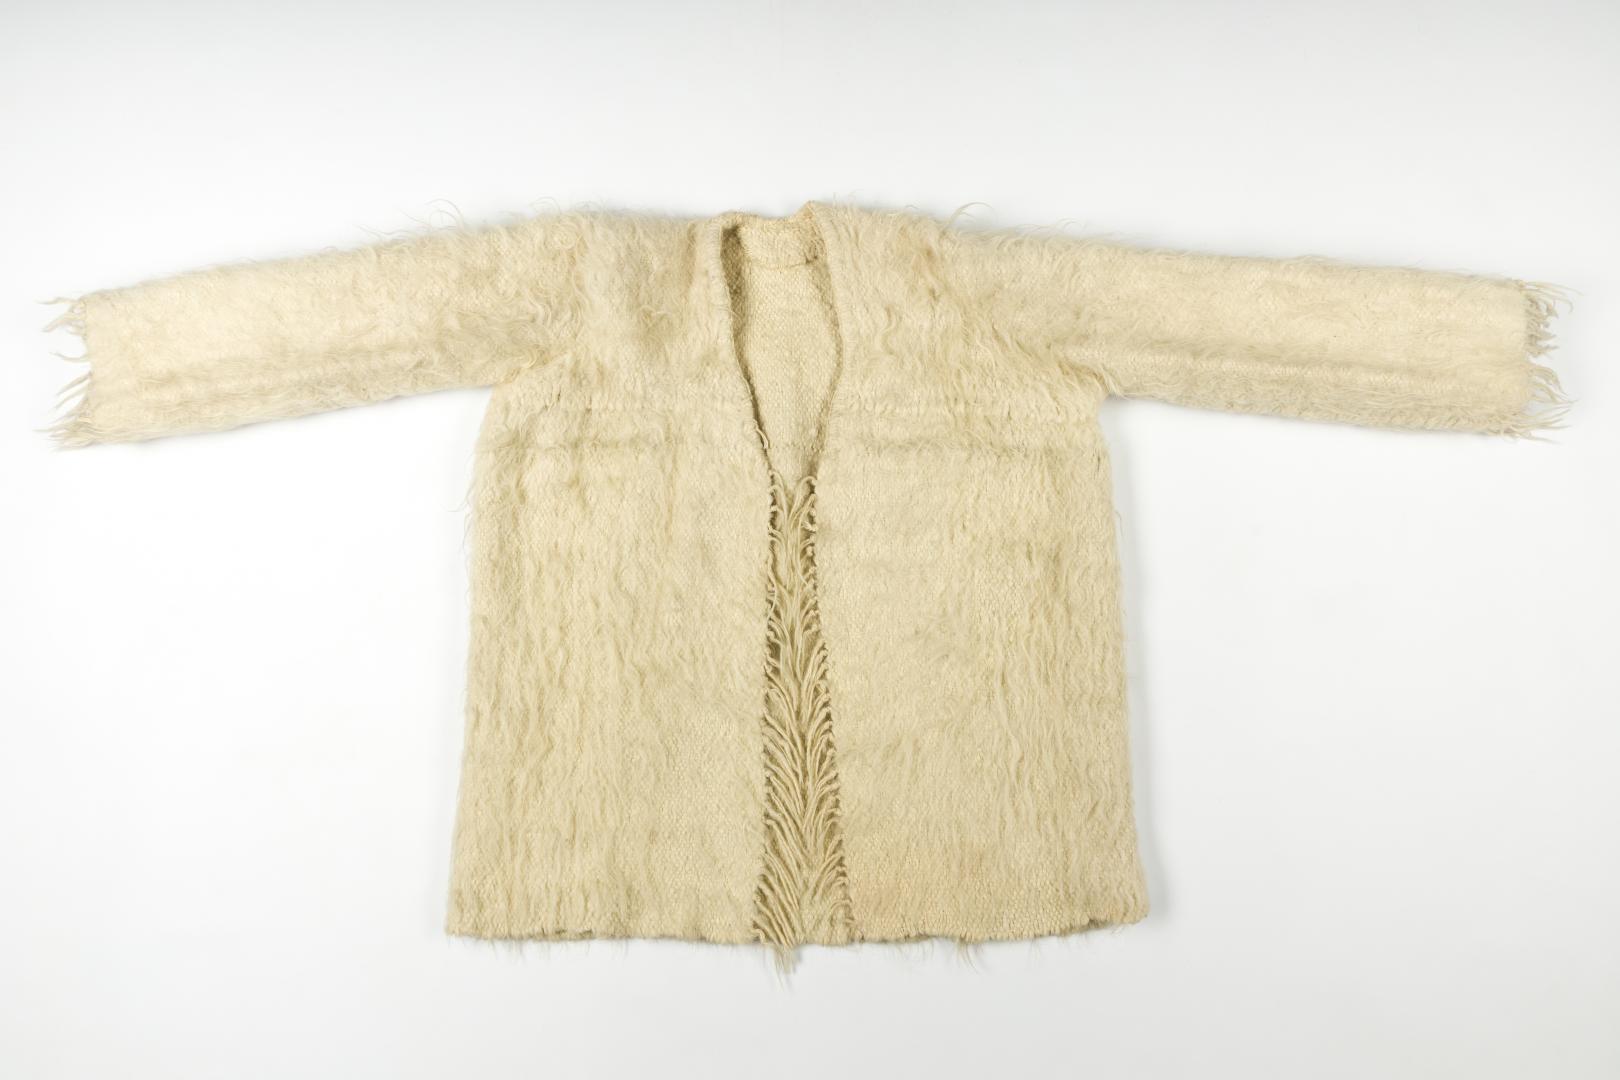 Hunia (wool overcoat) with pile